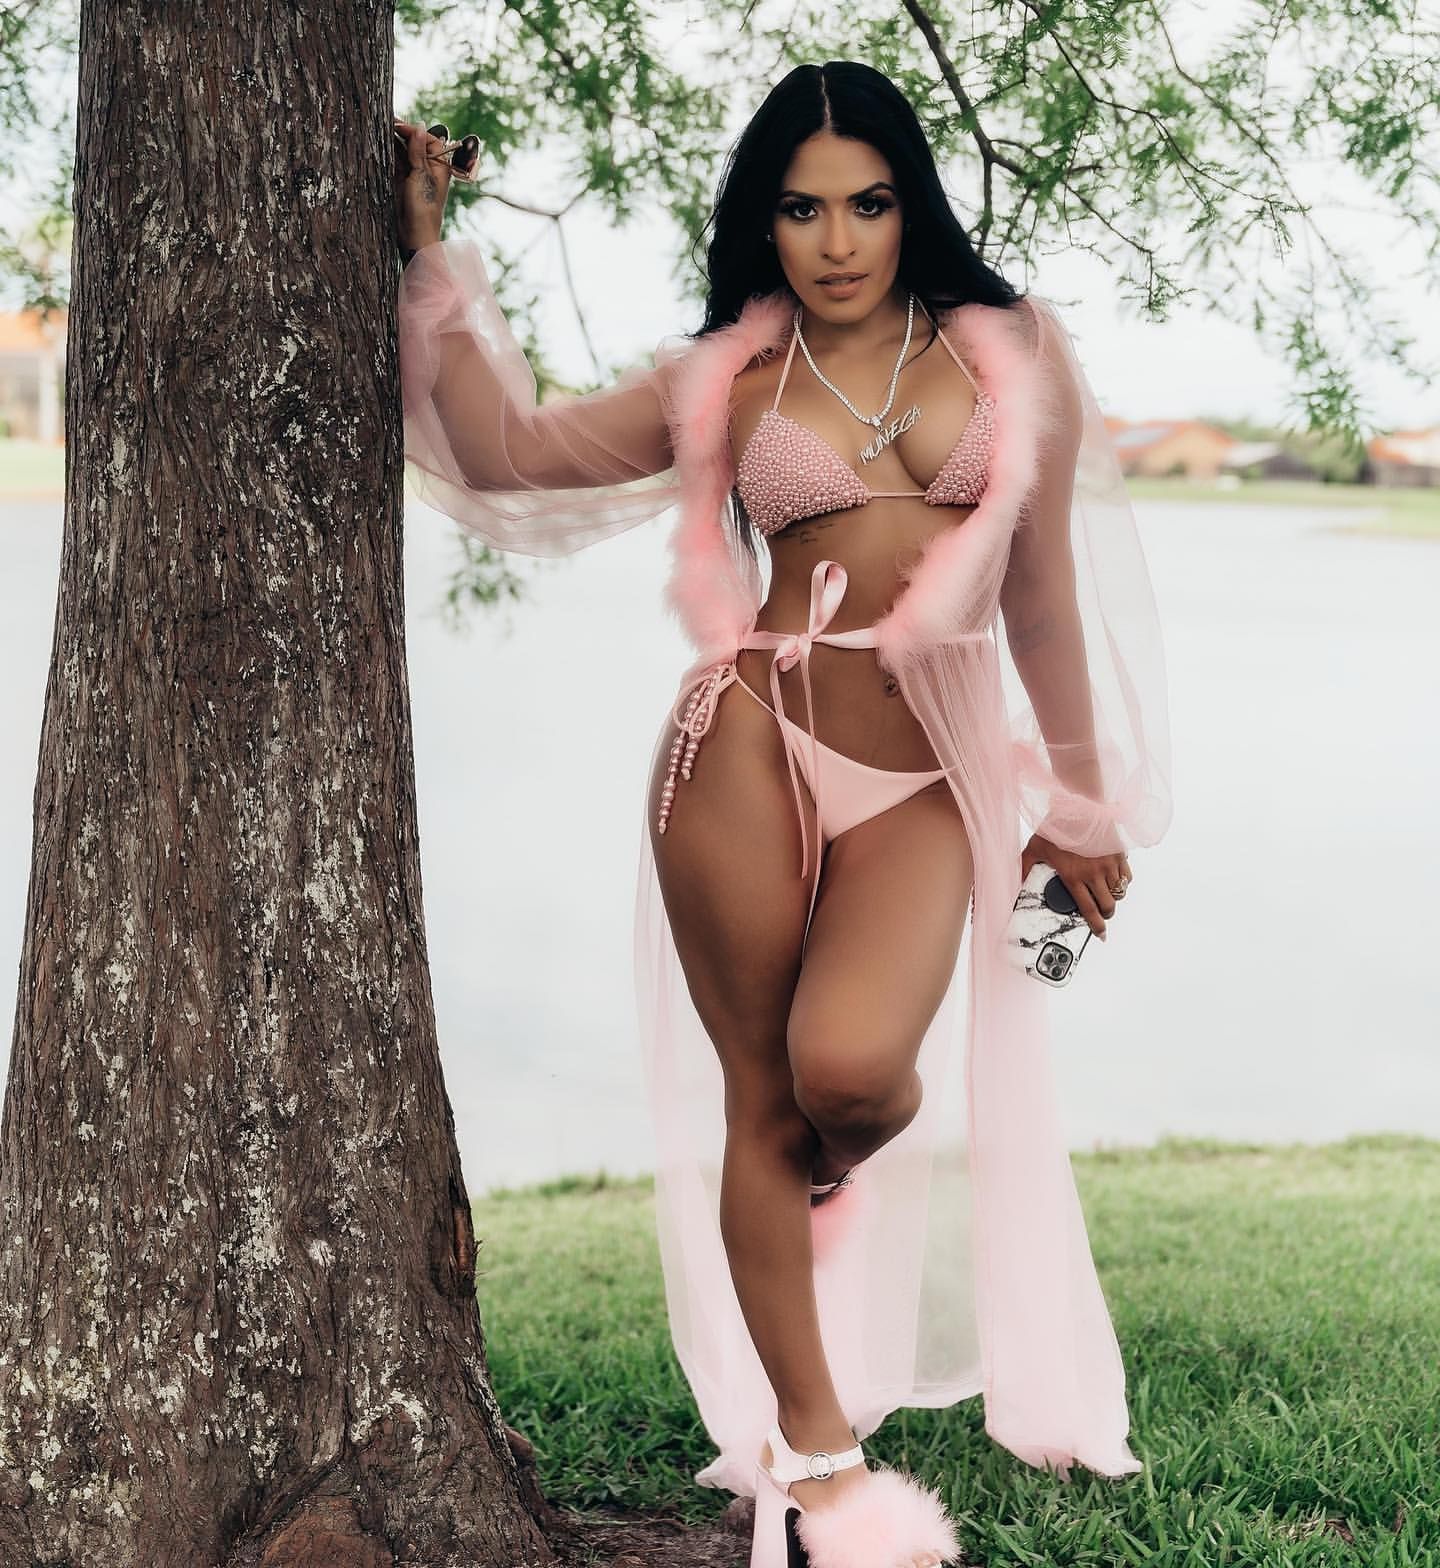 Zelina Vega Shows Her Tits in a Bikini | TheFappening!